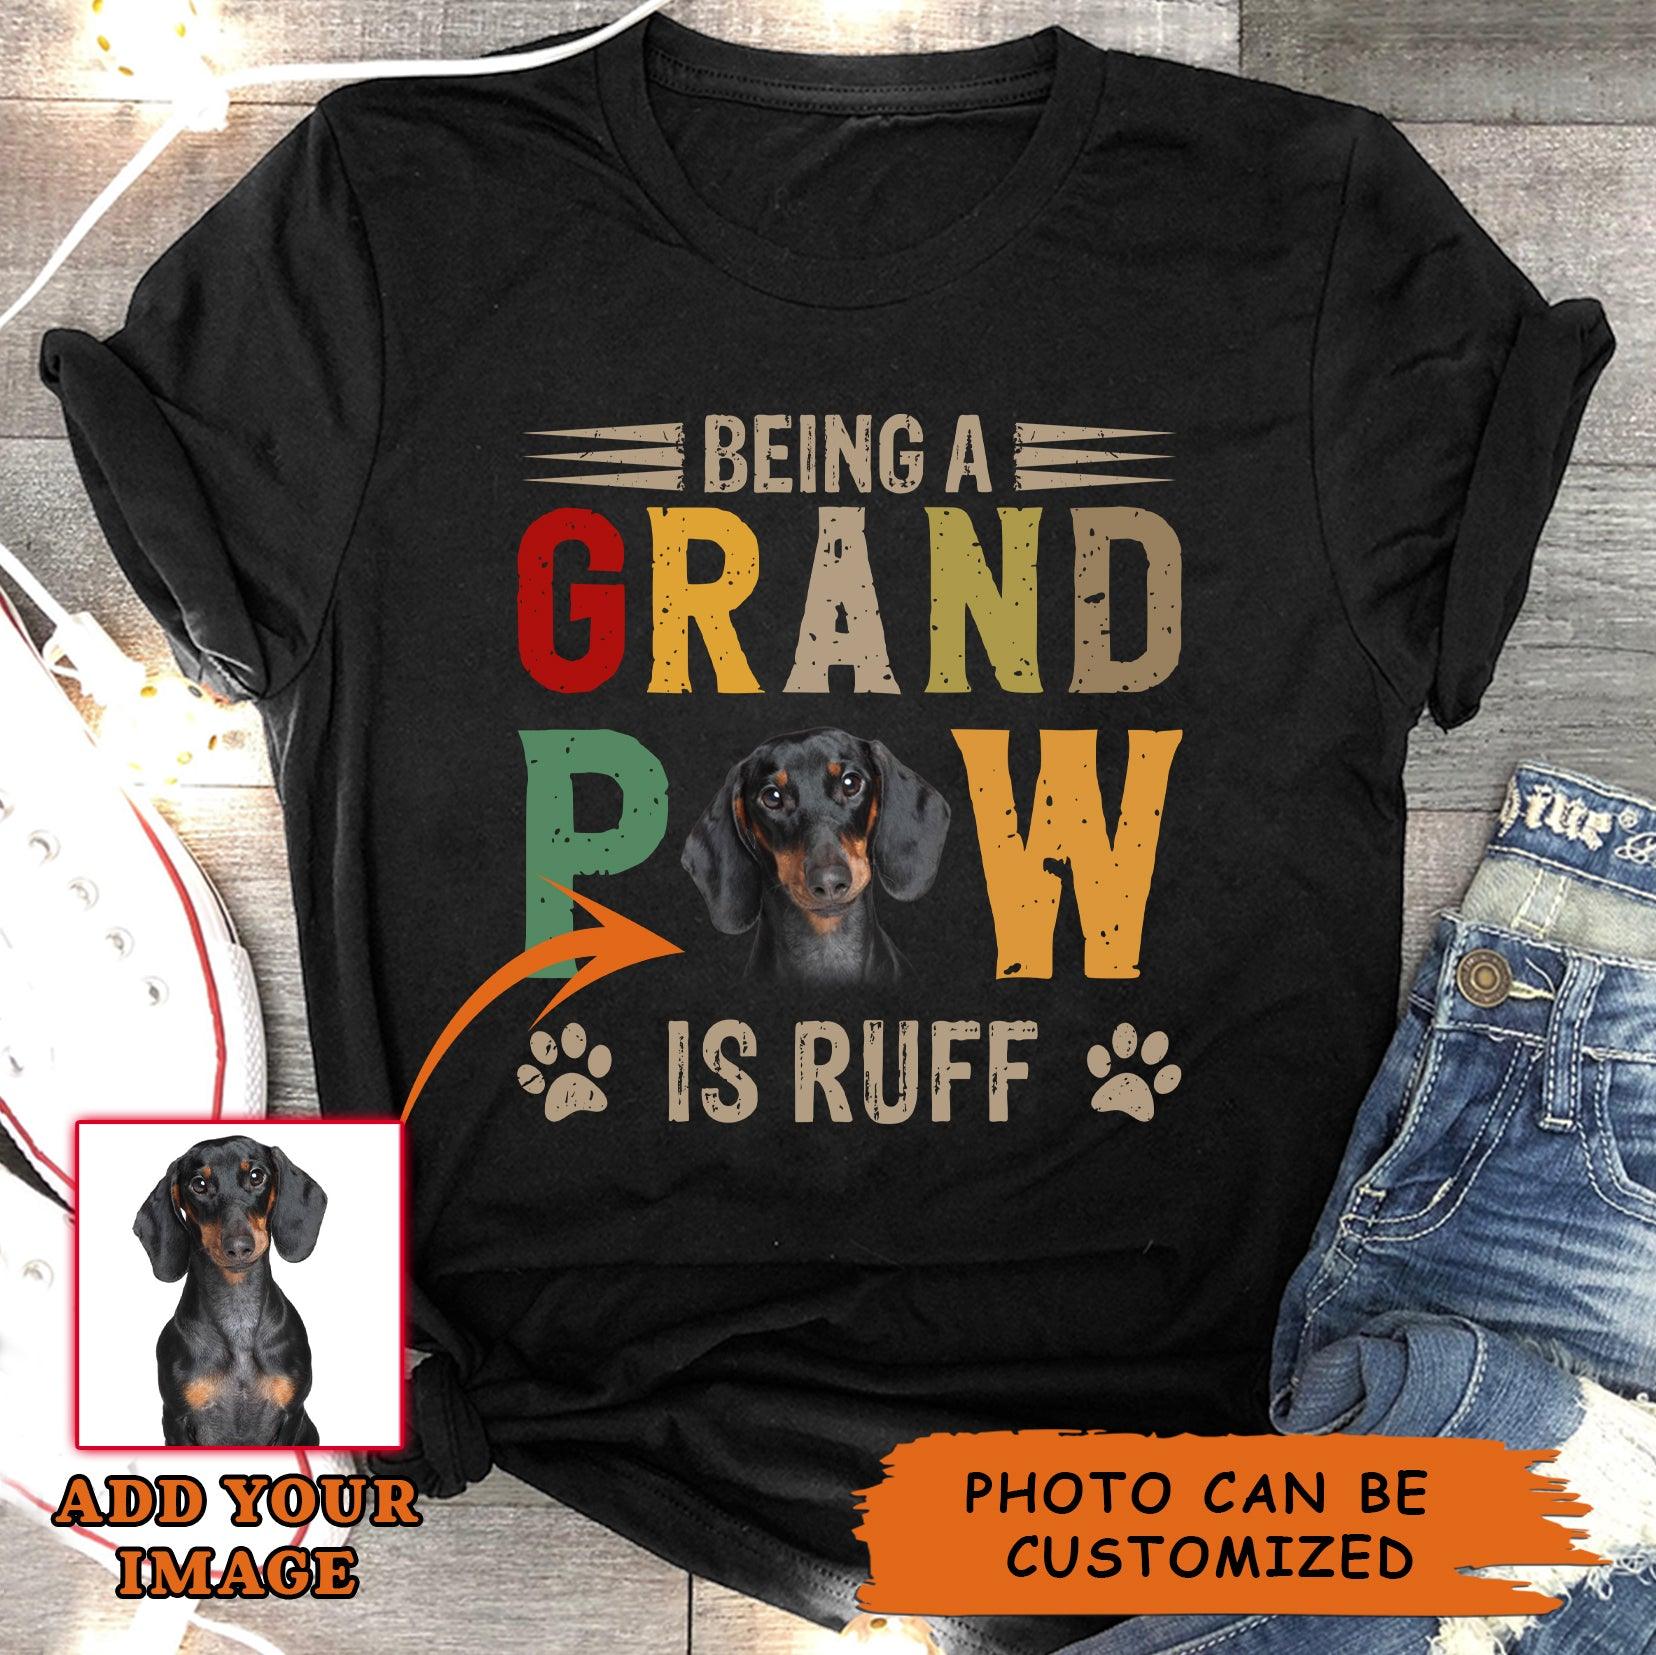 Dachshund Dog Unisex T Shirt Custom - Customize Photo Being A Grand Paw Is Ruff Personalized Unisex T Shirt - Gift For Dog Lovers, Friend, Family - Amzanimalsgift